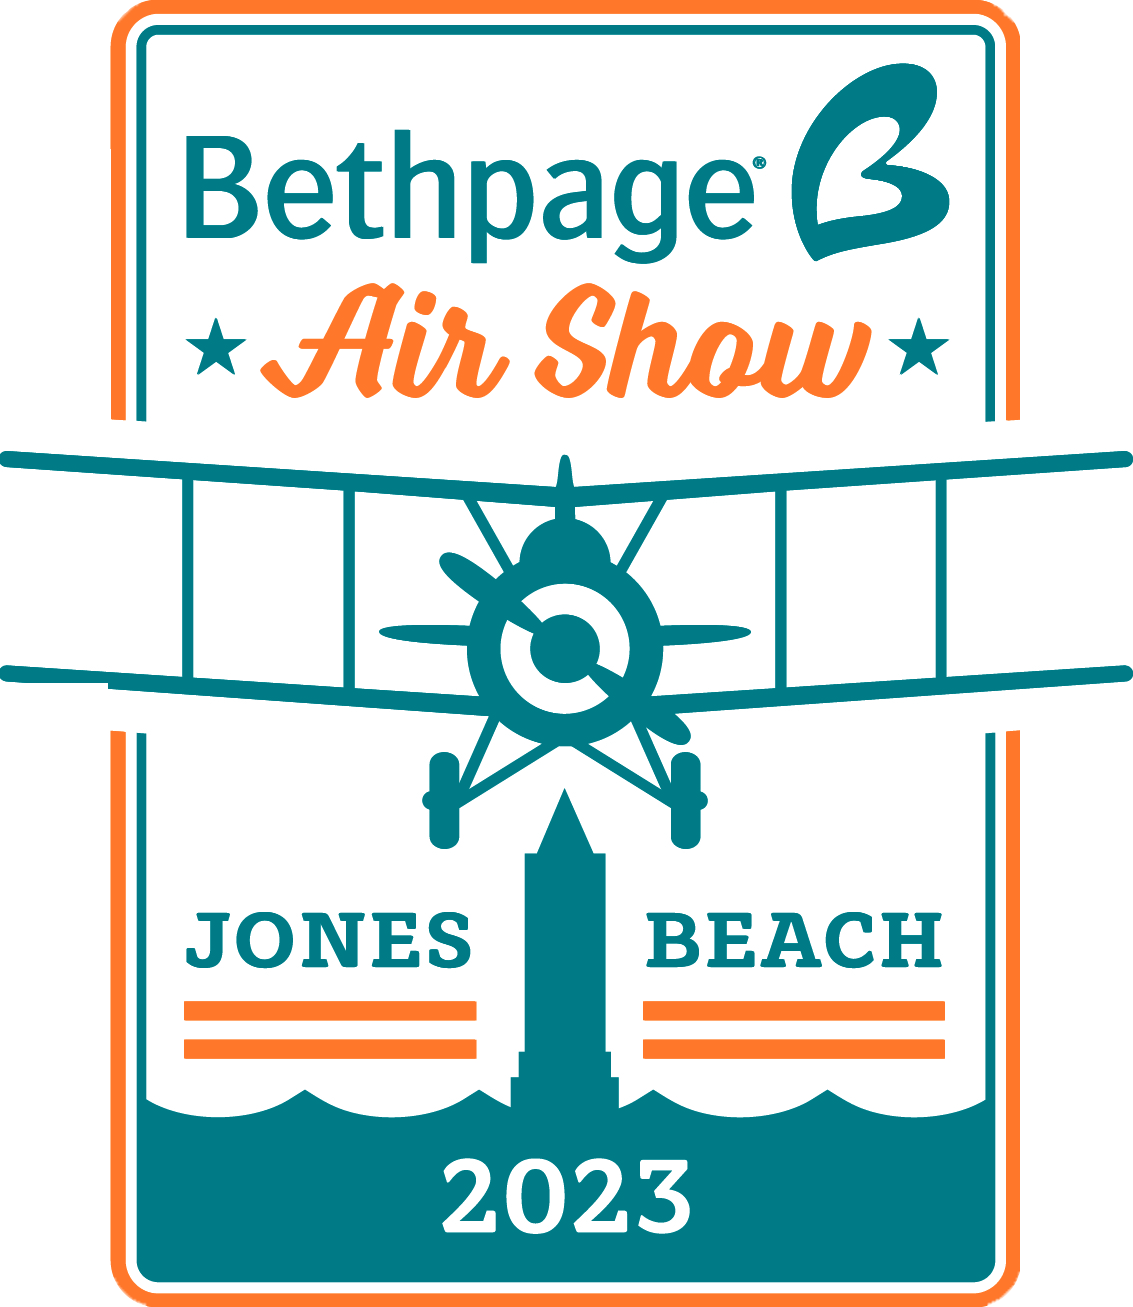 Bethpage Air Show at Jones Beach